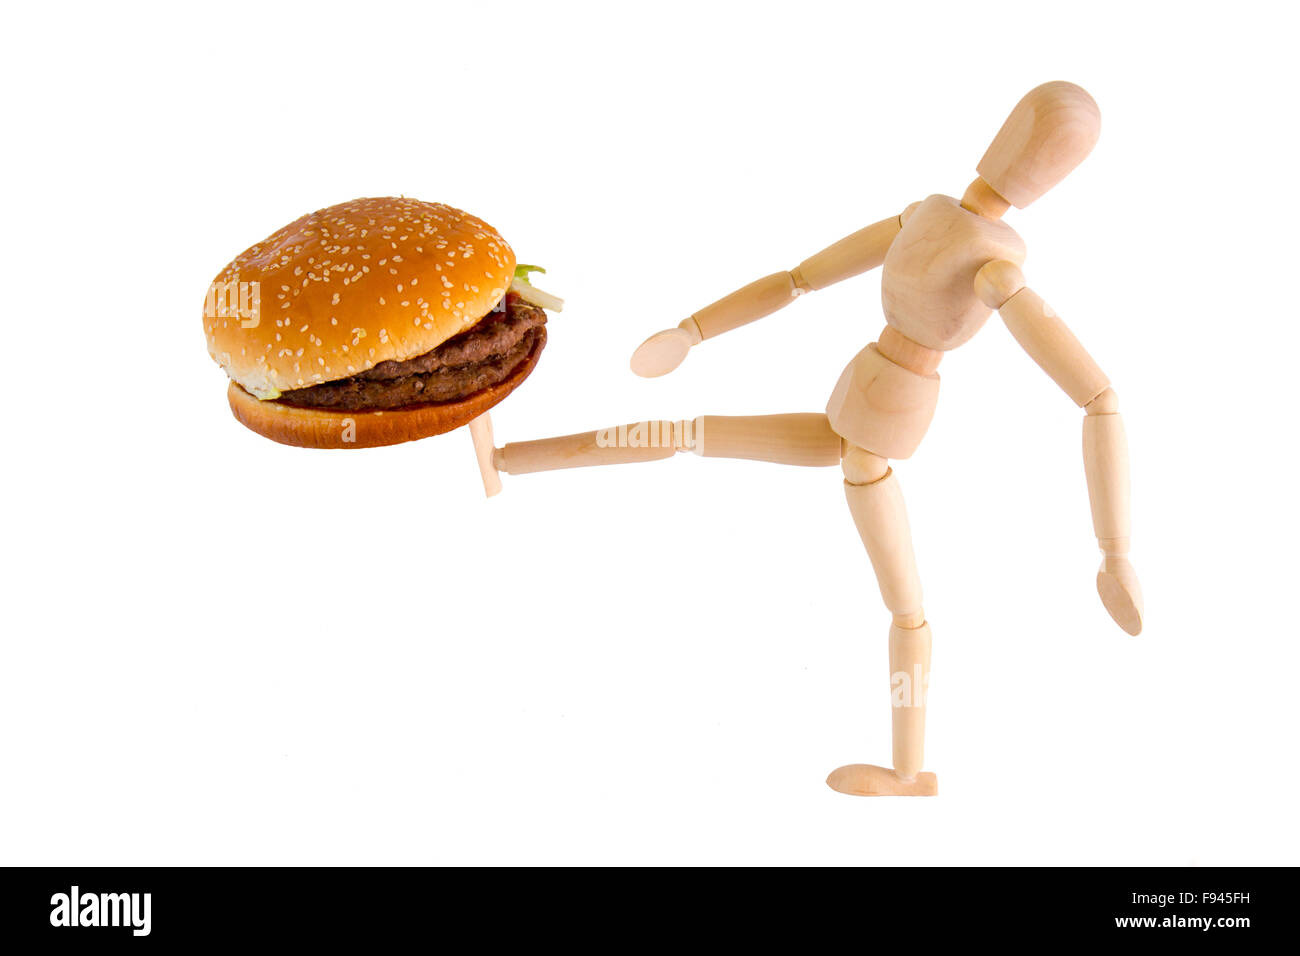 Puppet kicks burger away on white background Stock Photo